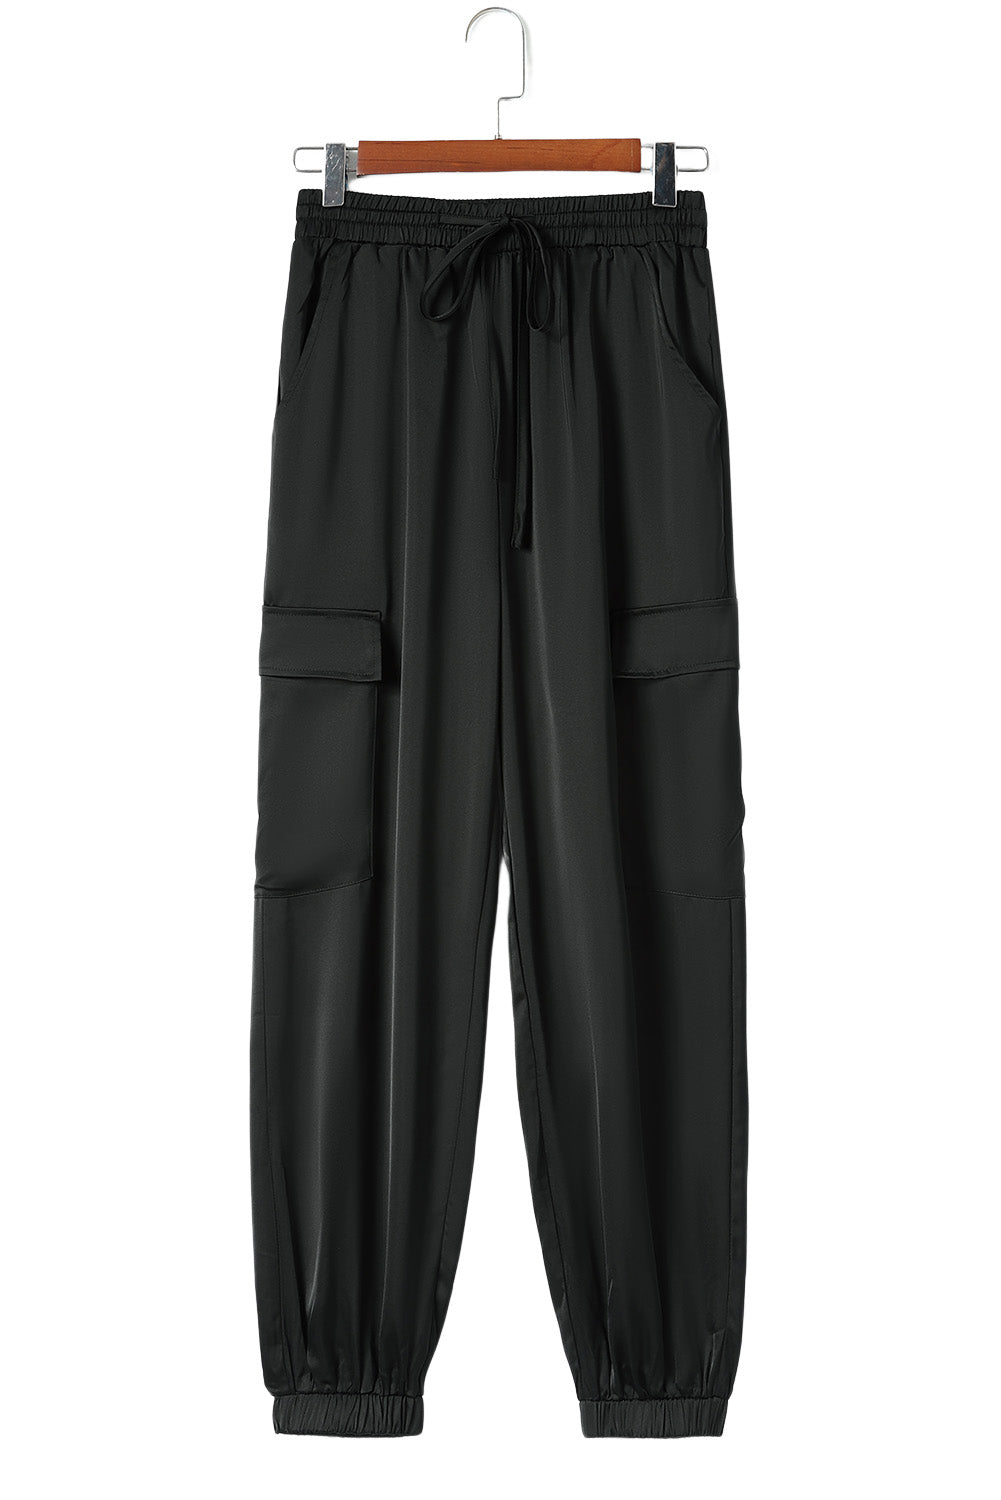 Black Satin Pocketed Drawstring Elastic Waist Pants-15